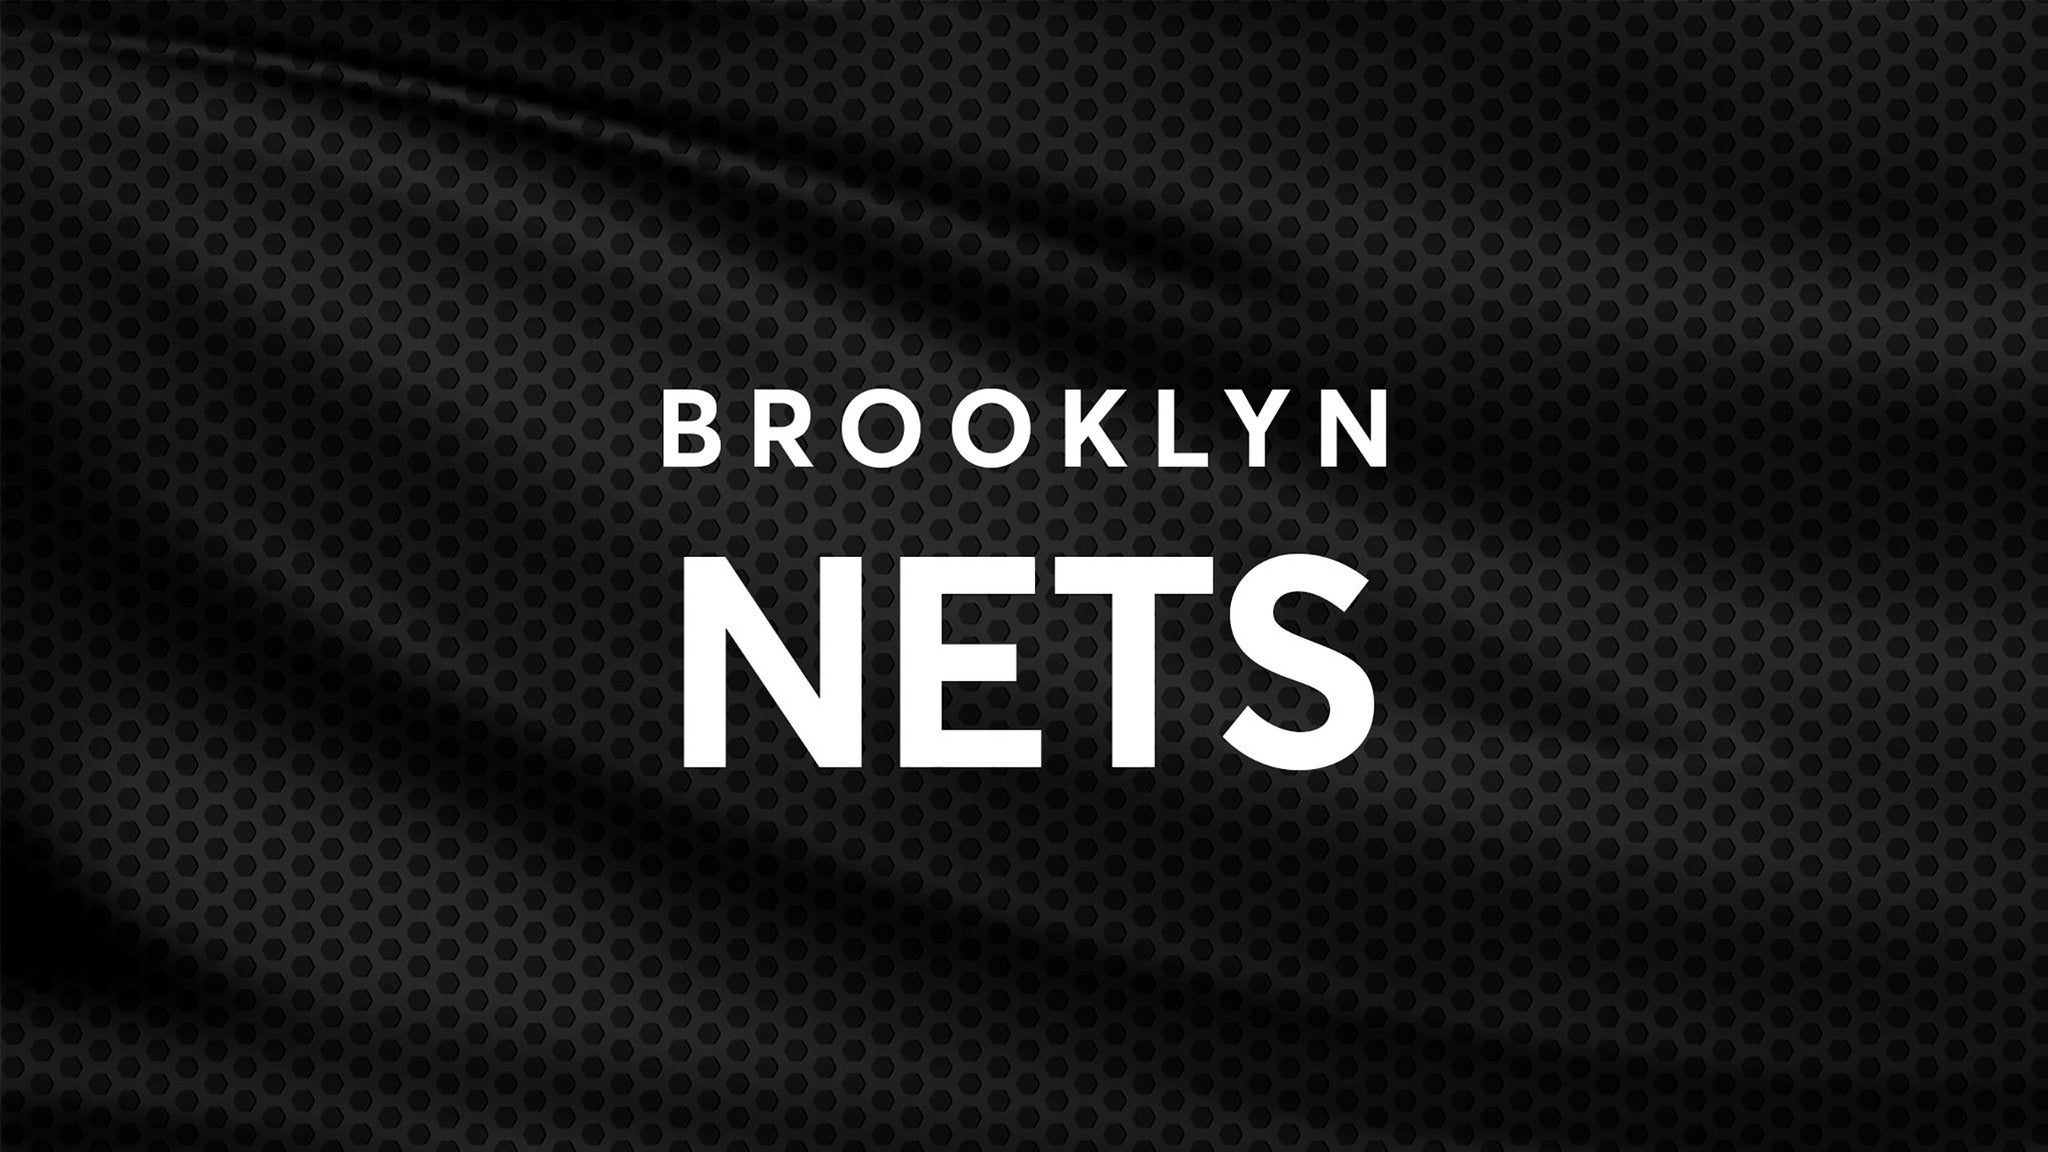 Brooklyn Nets vs. Toronto Raptors